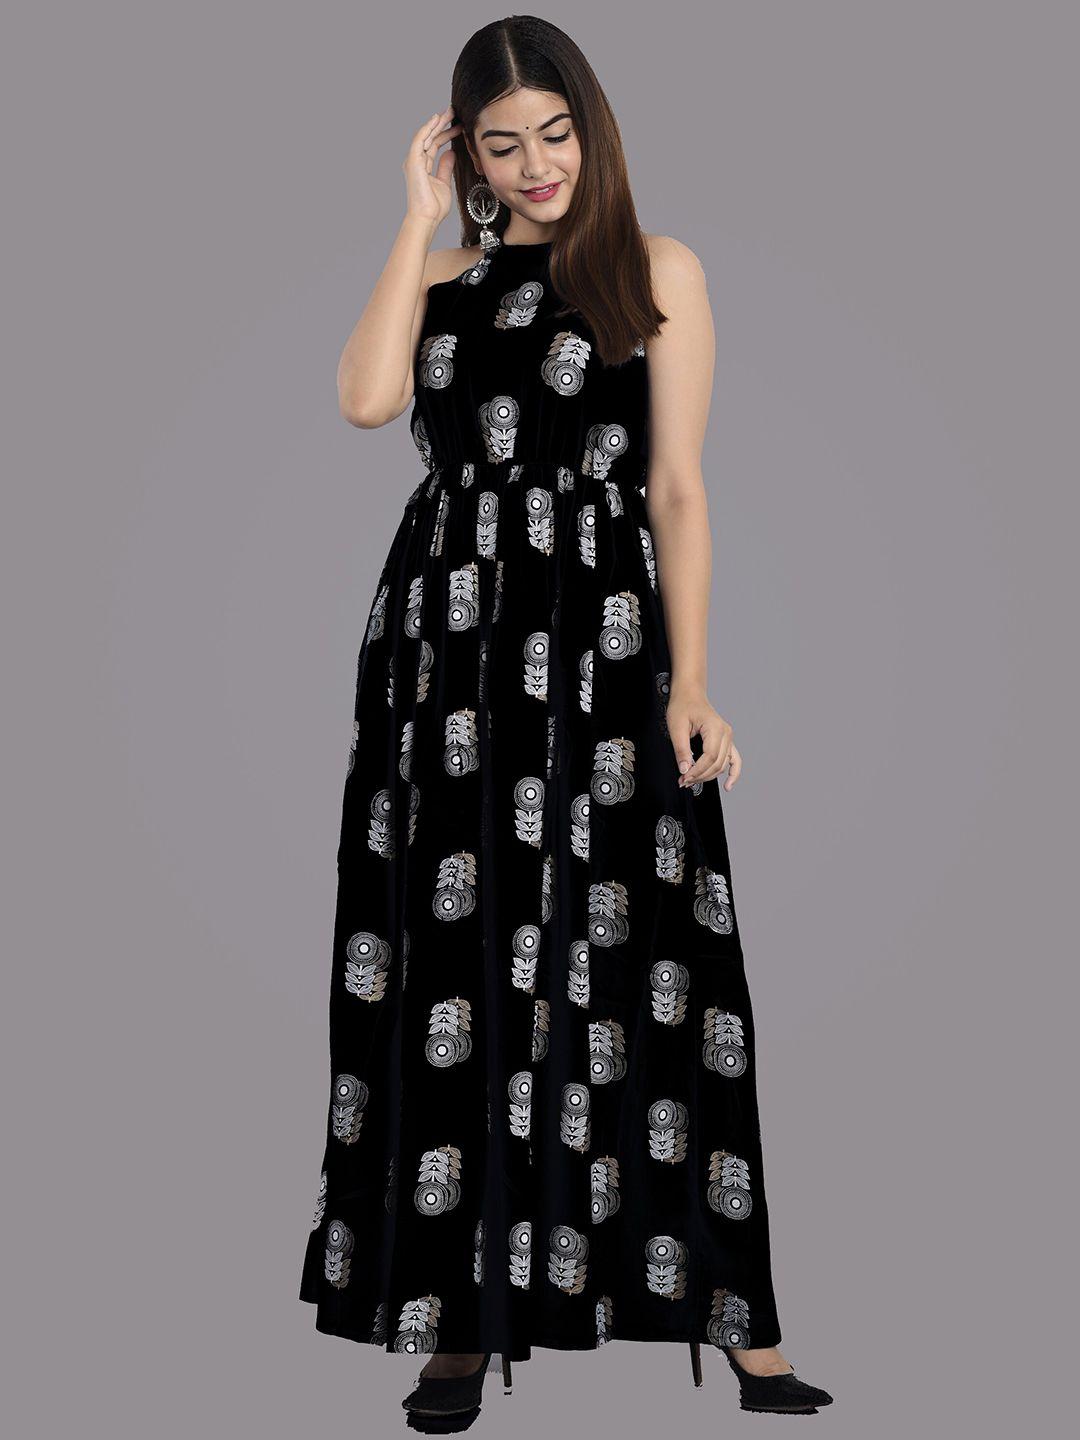 metro-fashion black floral maxi dress